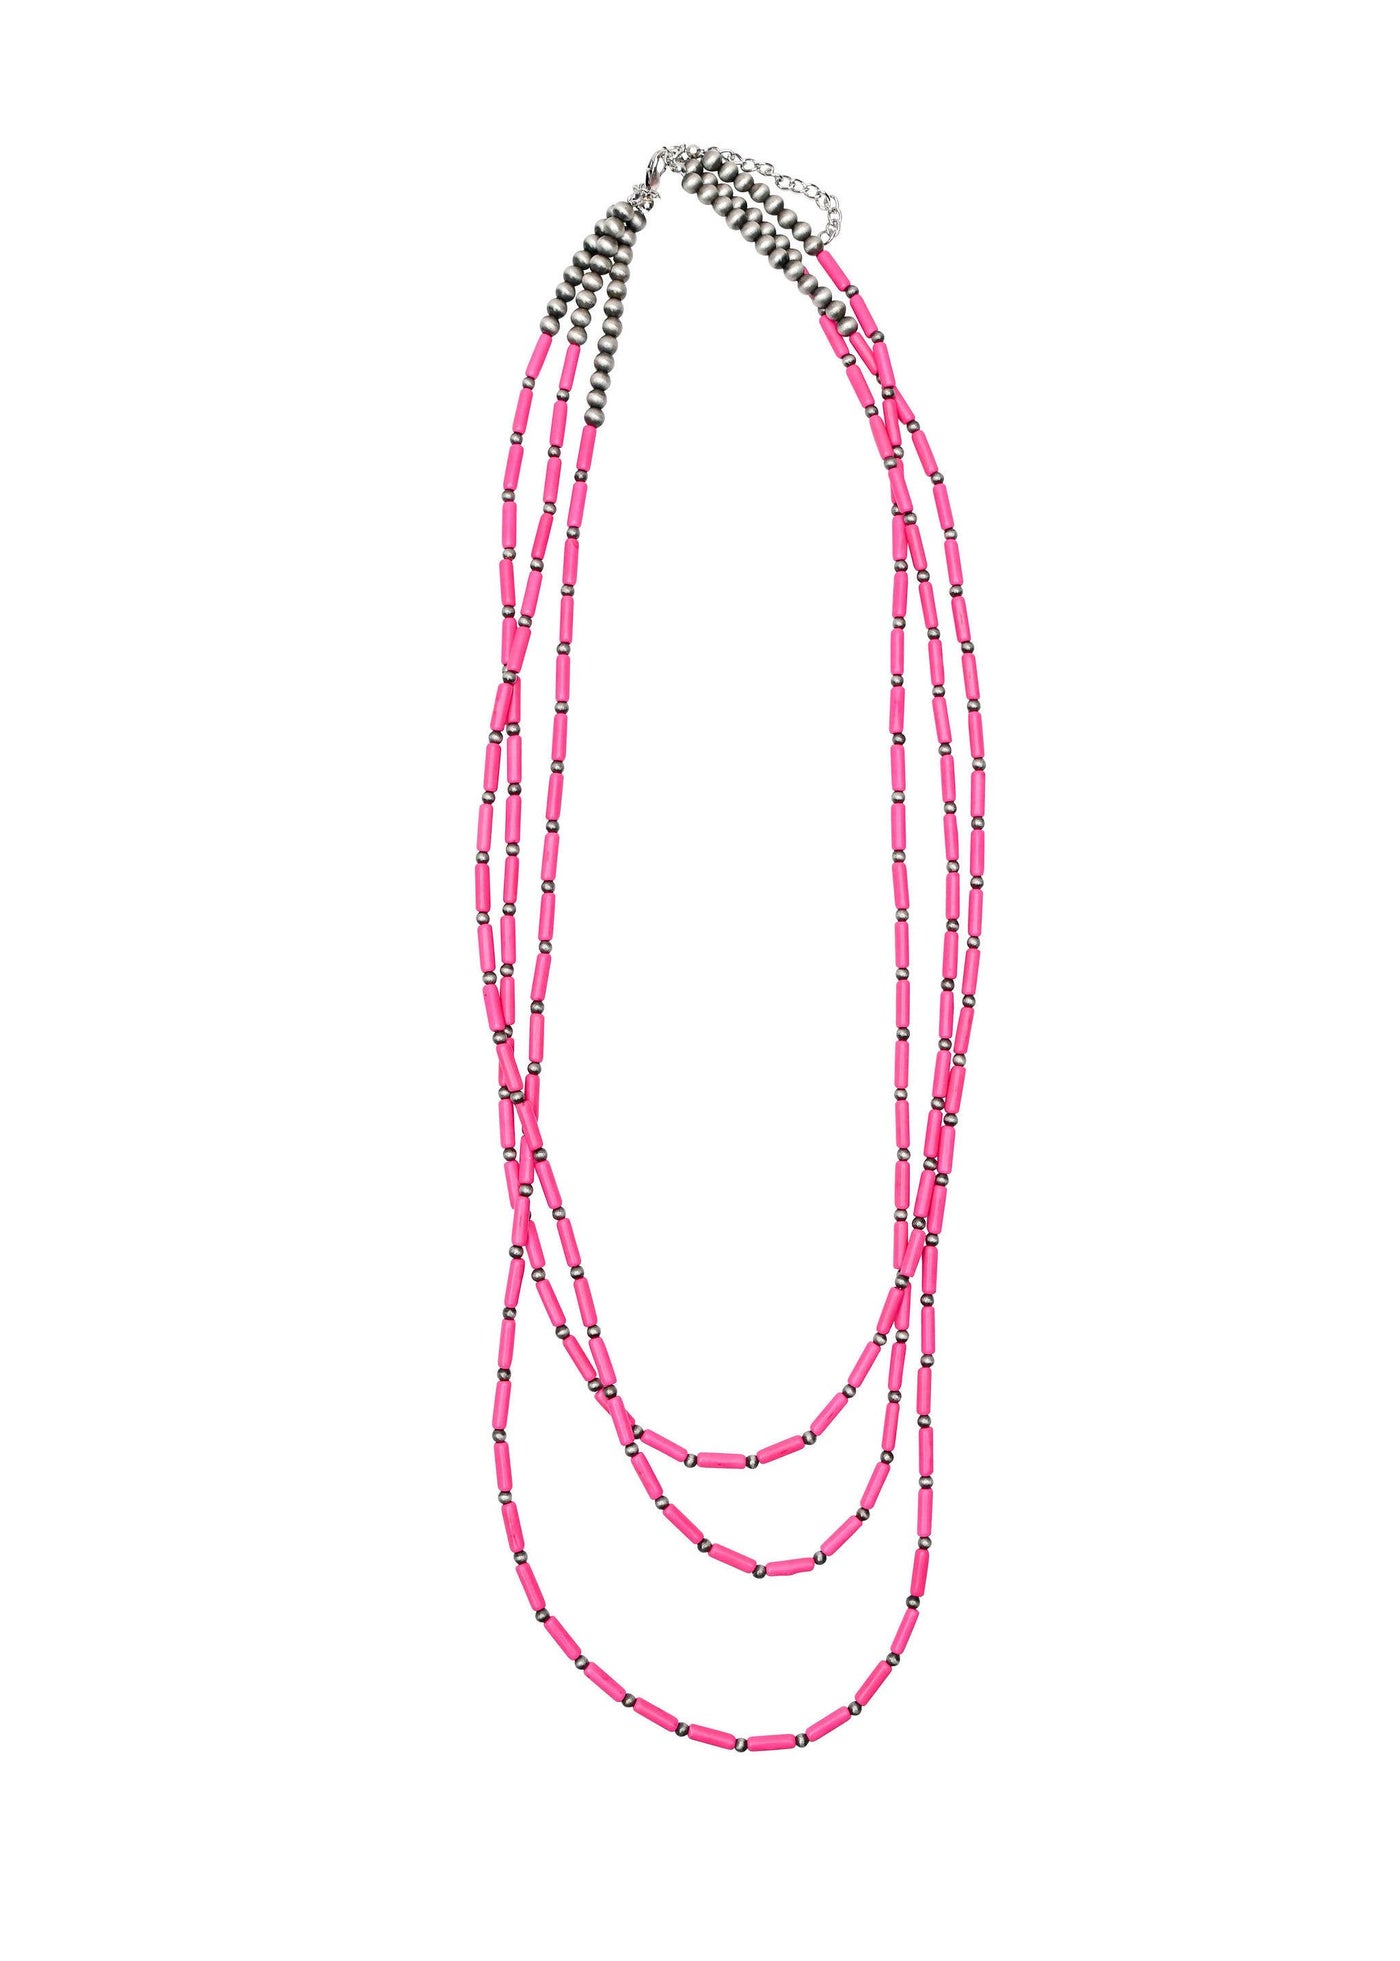 Three Strand Pink Tube Bead Necklace